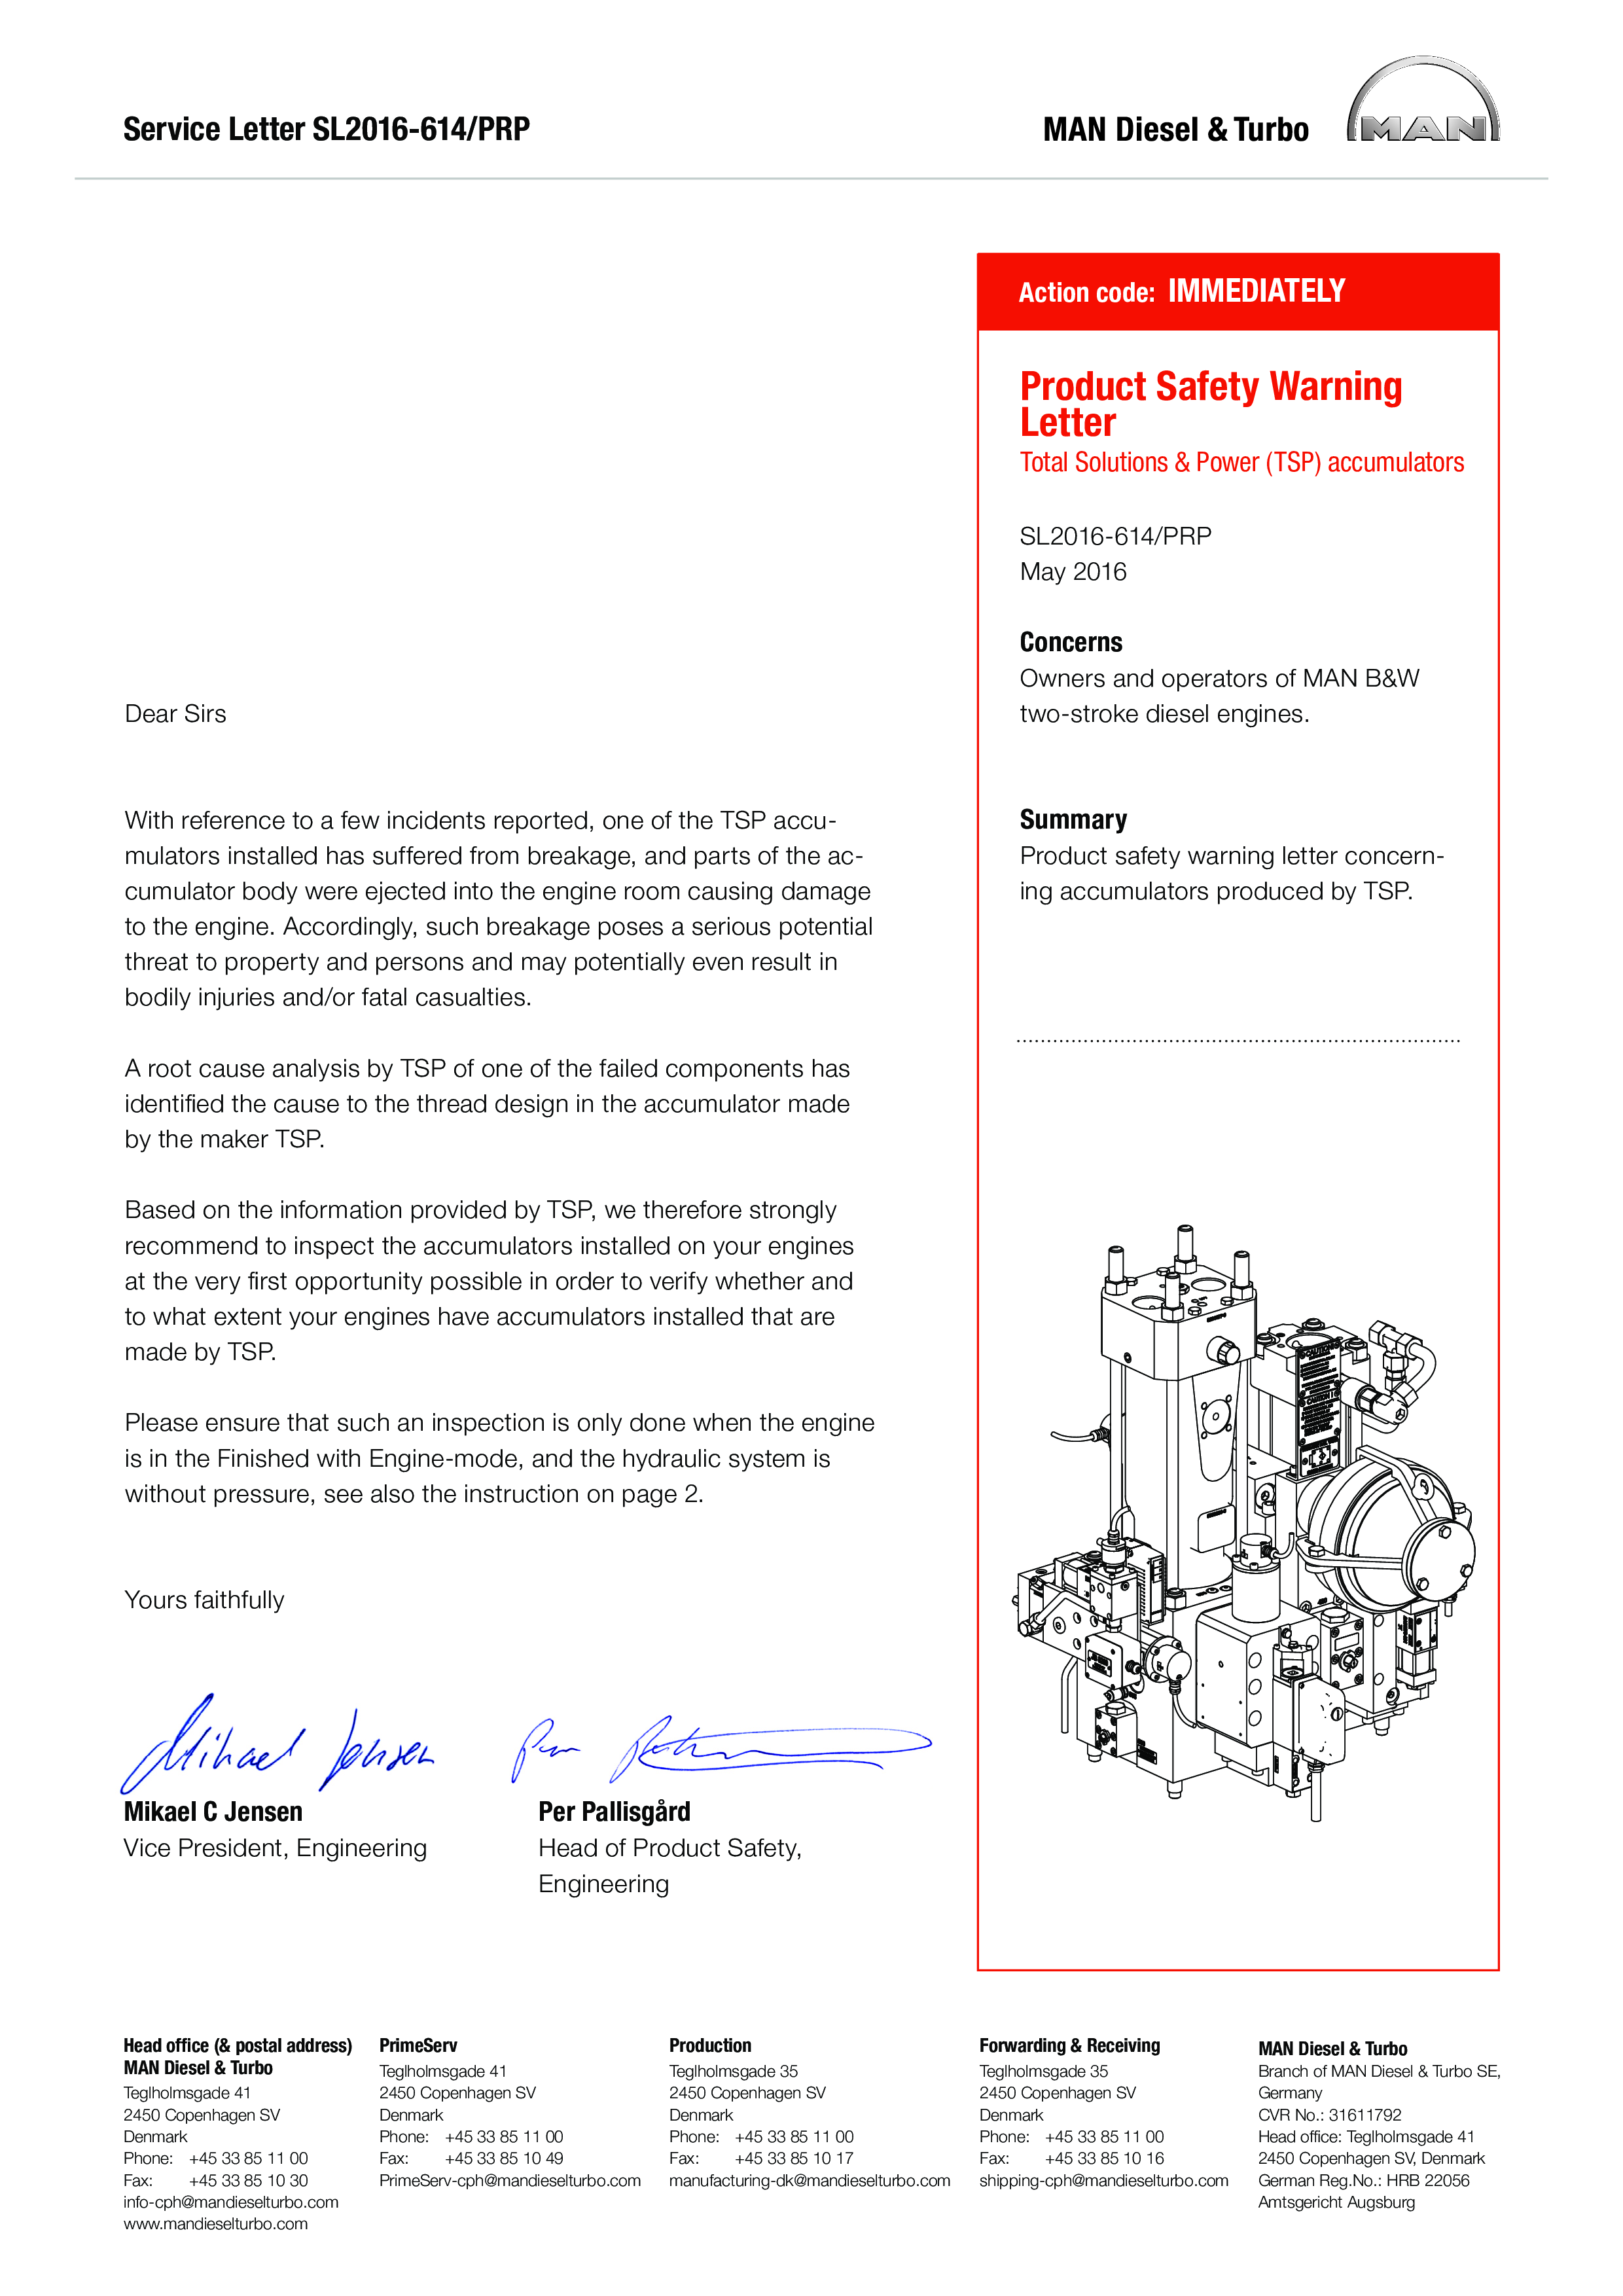 product safety warning letter plantilla imagen principal